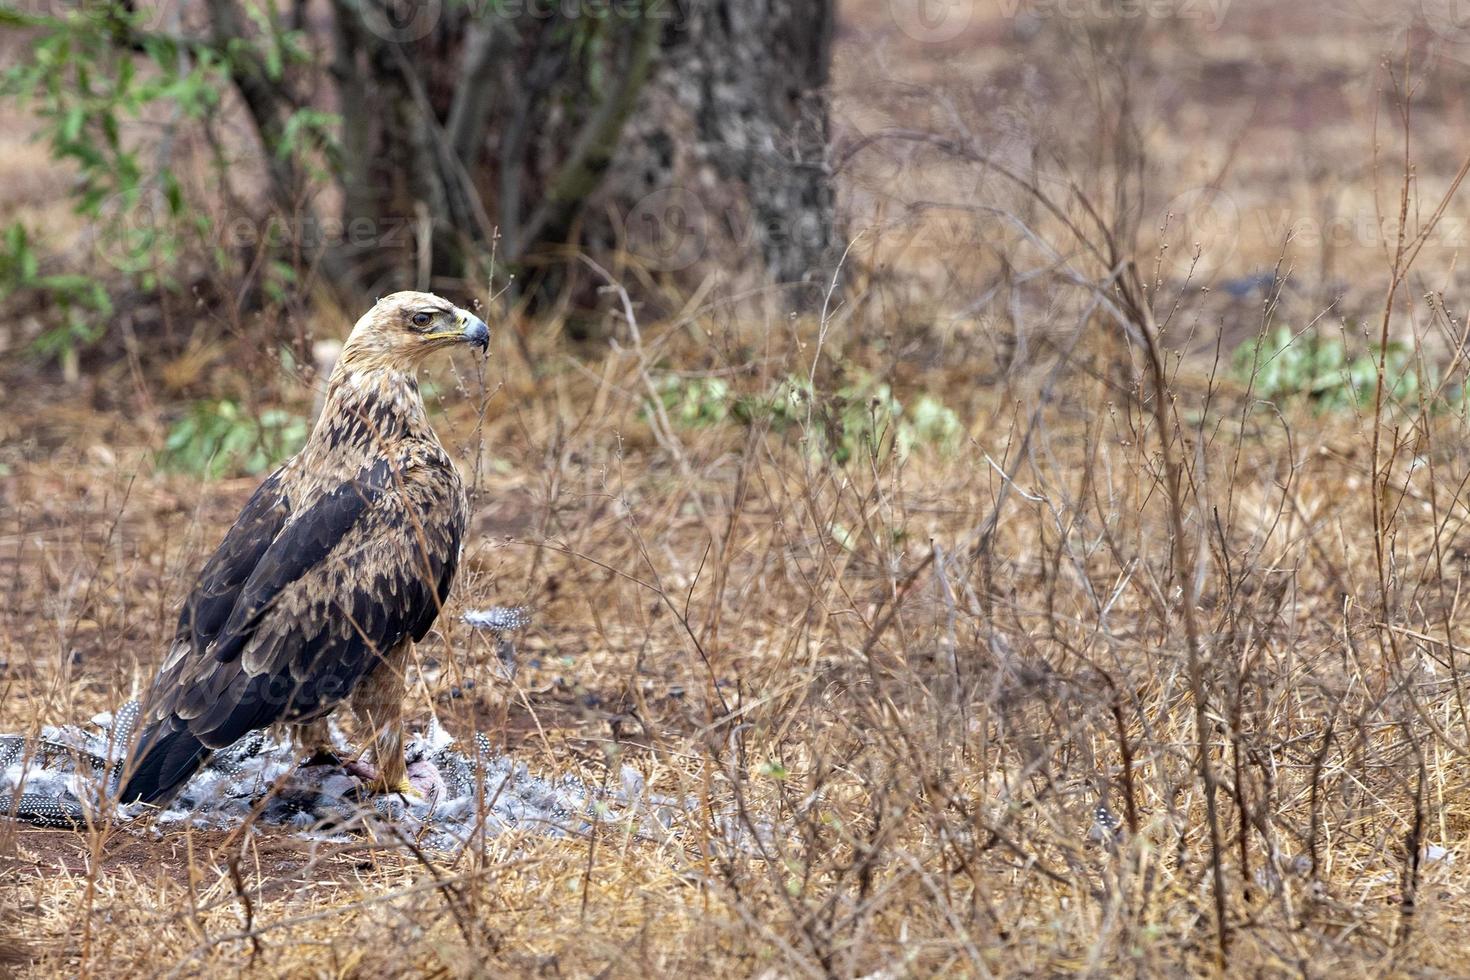 águila leonada en el parque kruger sudáfrica foto